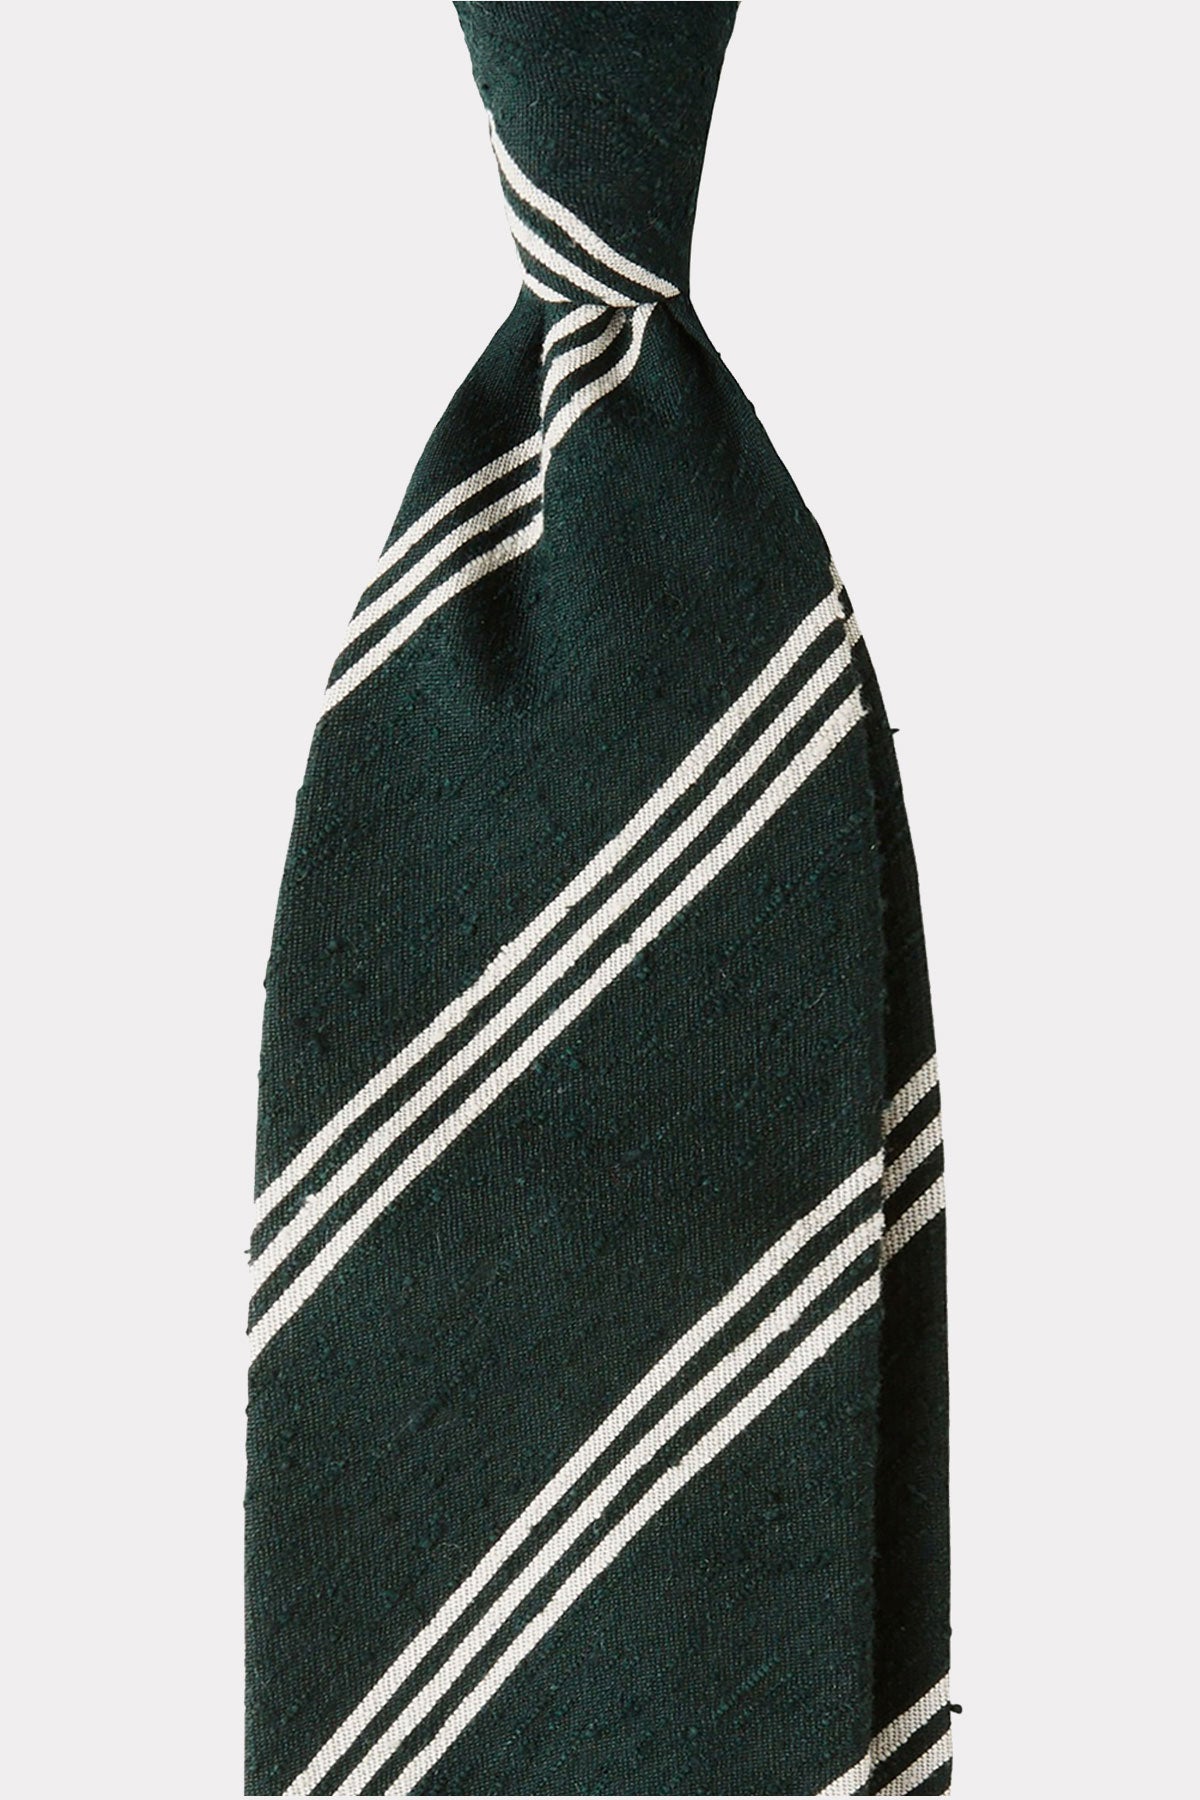 Krawatte in grün weiss gestreift